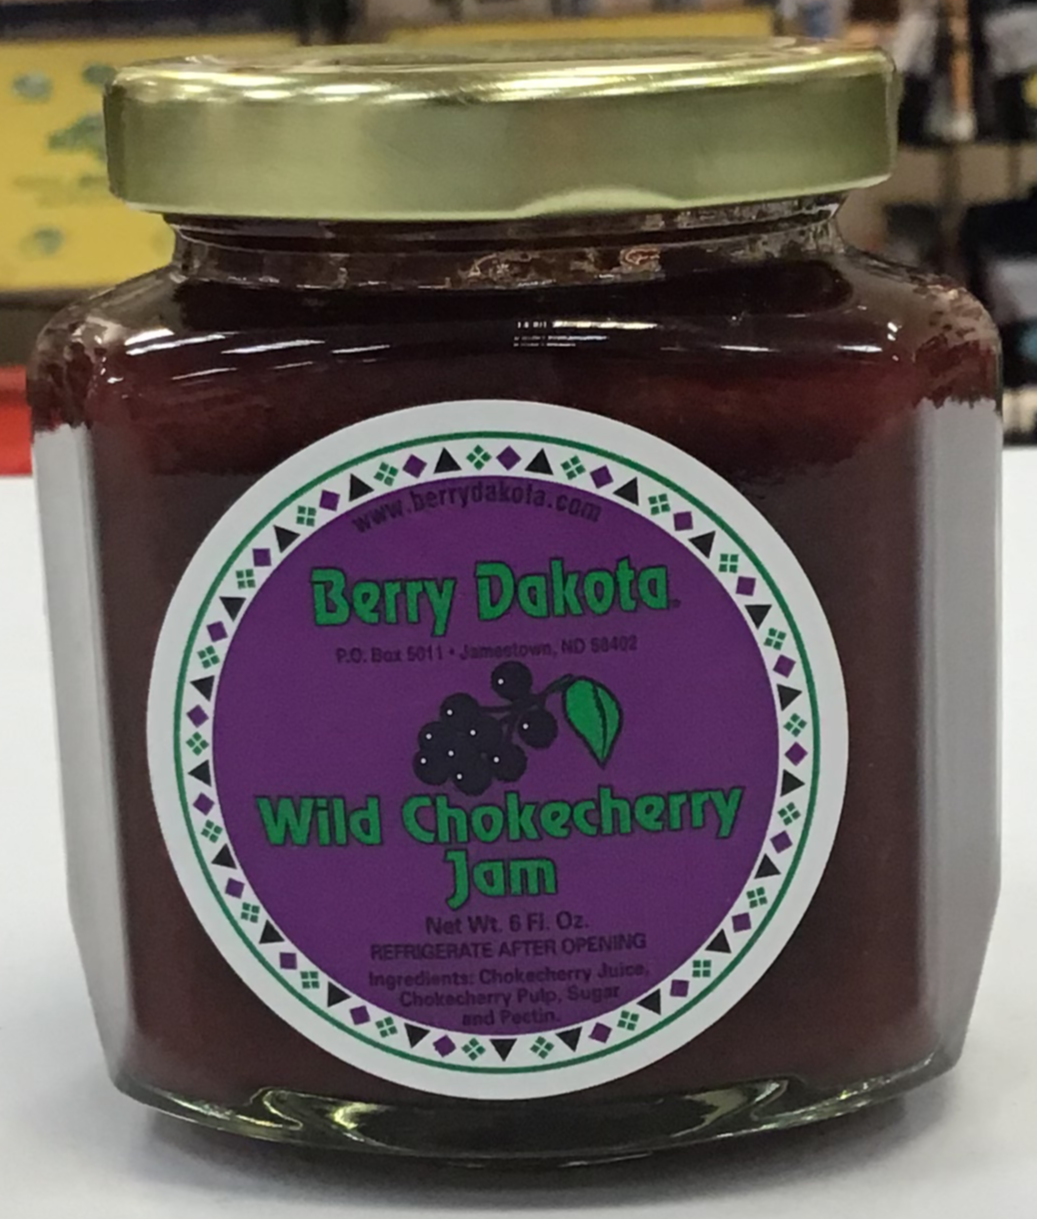 Berry Dakota Wild Chokecherry Jam 6 Ounce Jar